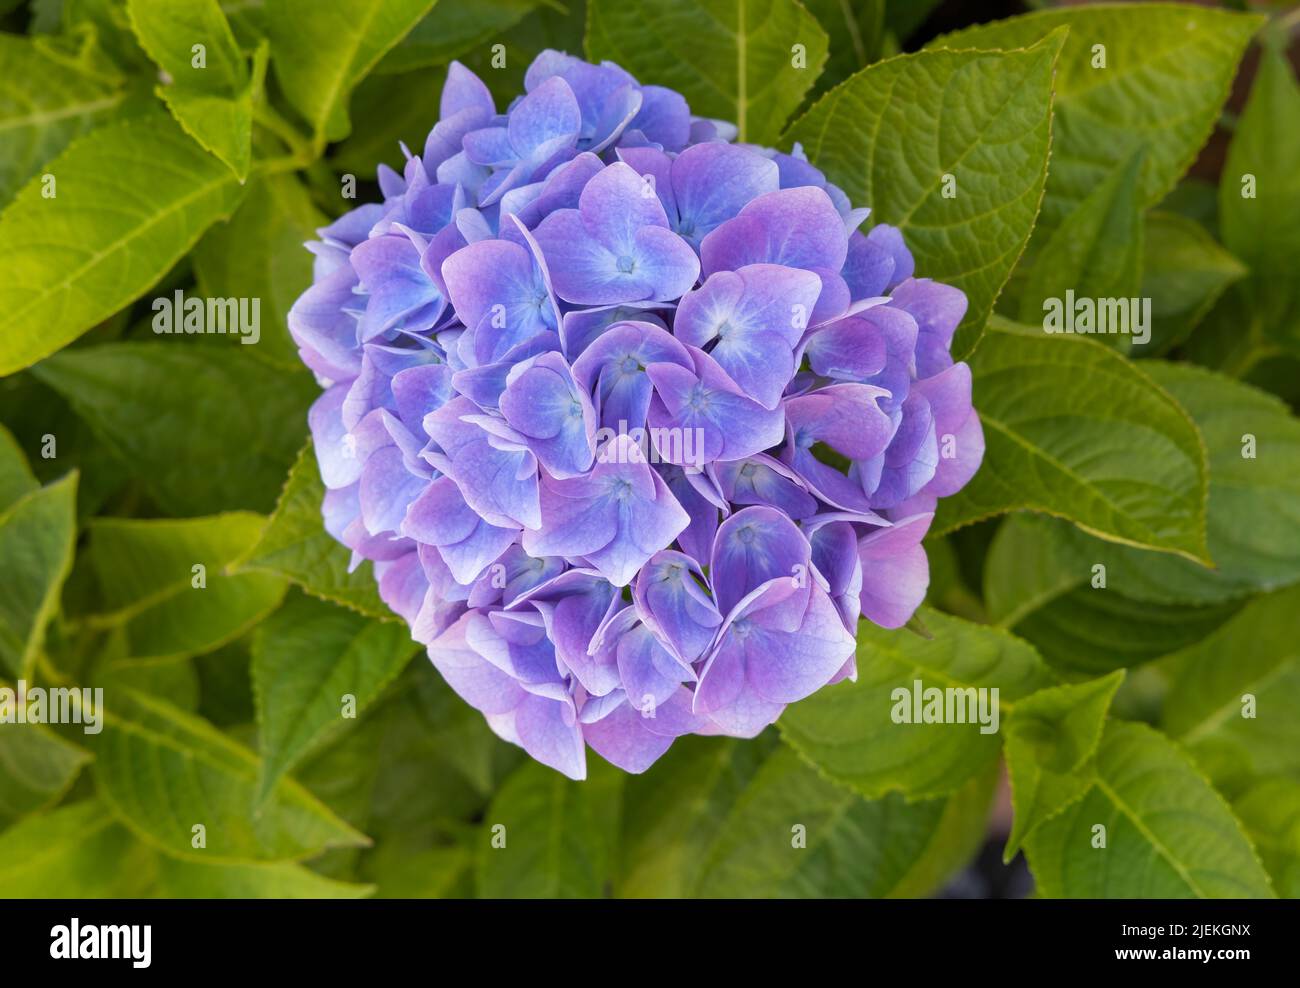 Beautiful Blue/Mauve Hydrangea flower (Hydrangea macrophylla) photographed against it's bright green leaves Stock Photo